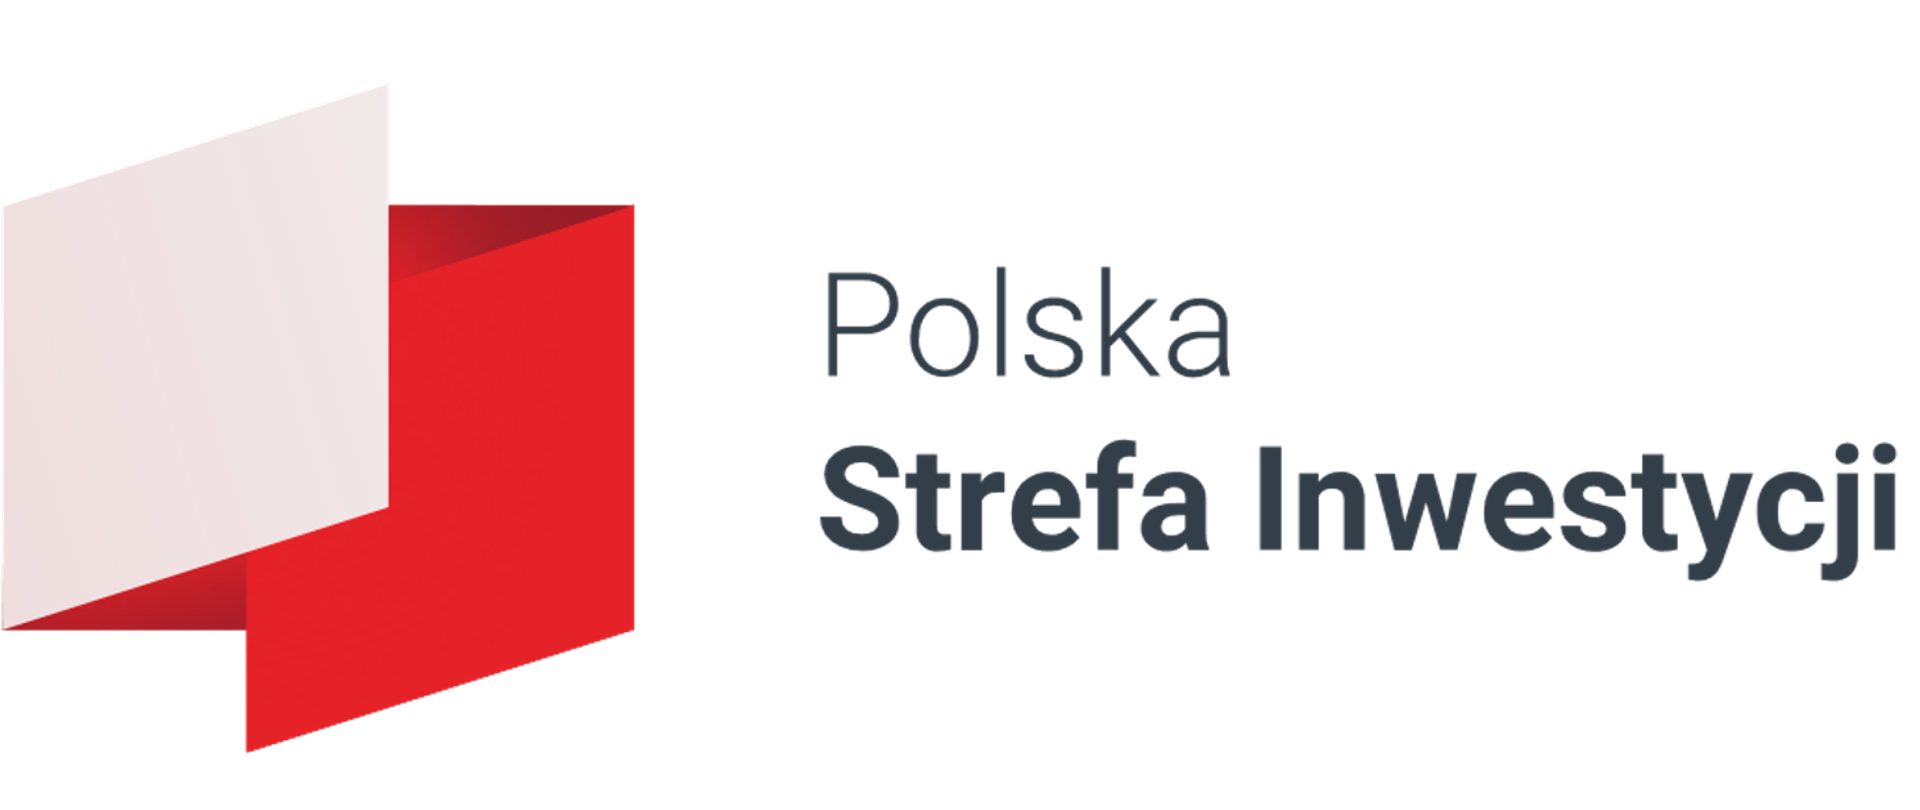 Polish Investment Zone